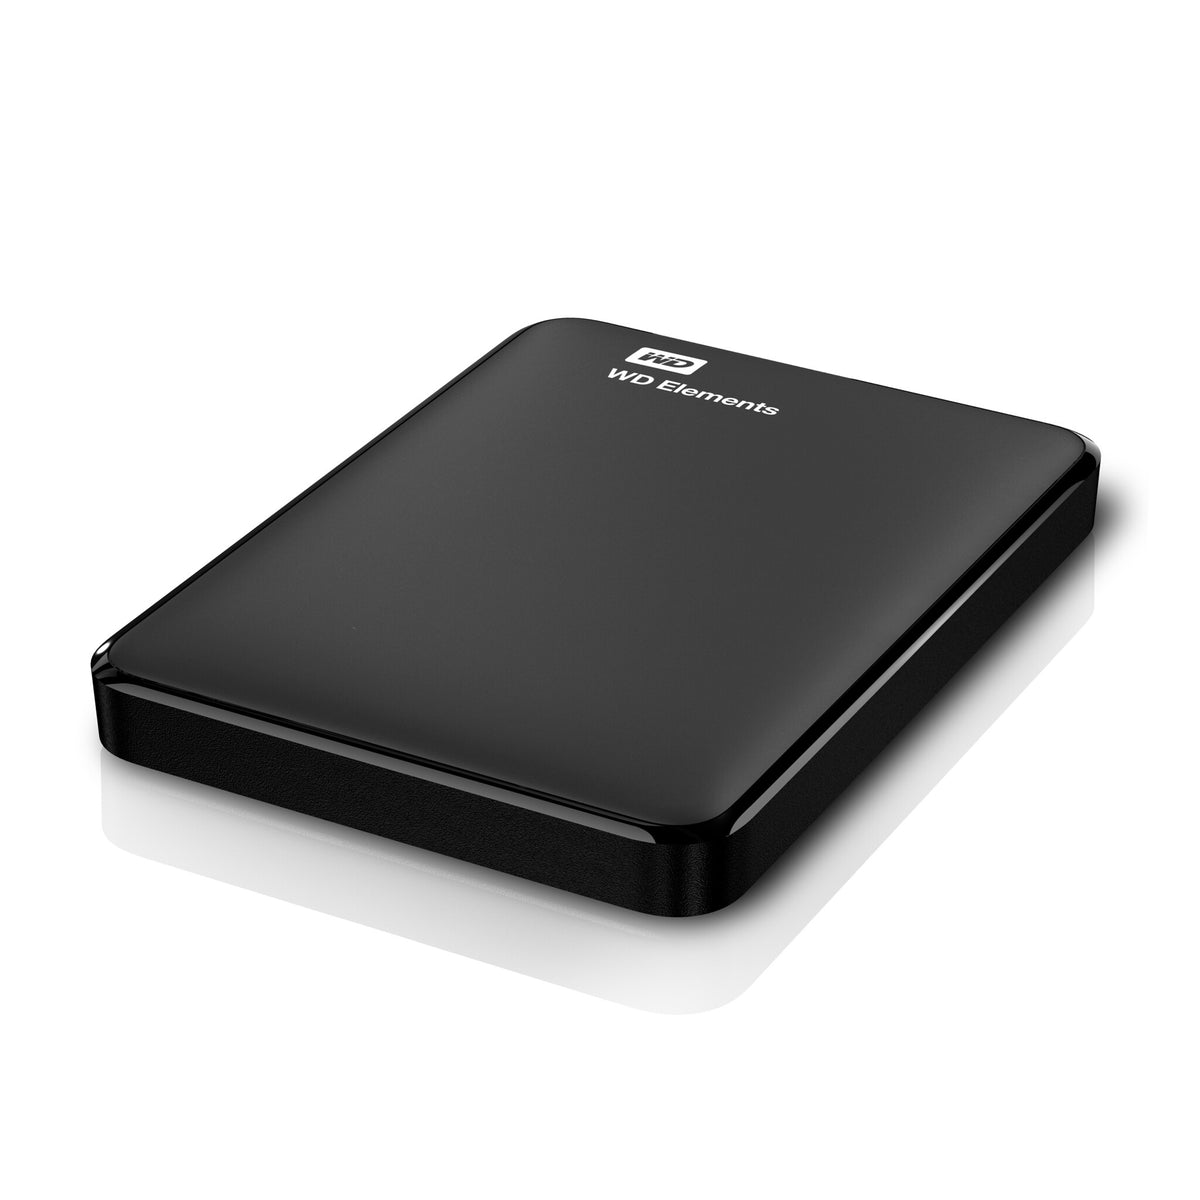 Western Digital WD Elements - Portable External Hard Drive in Black - 2 TB